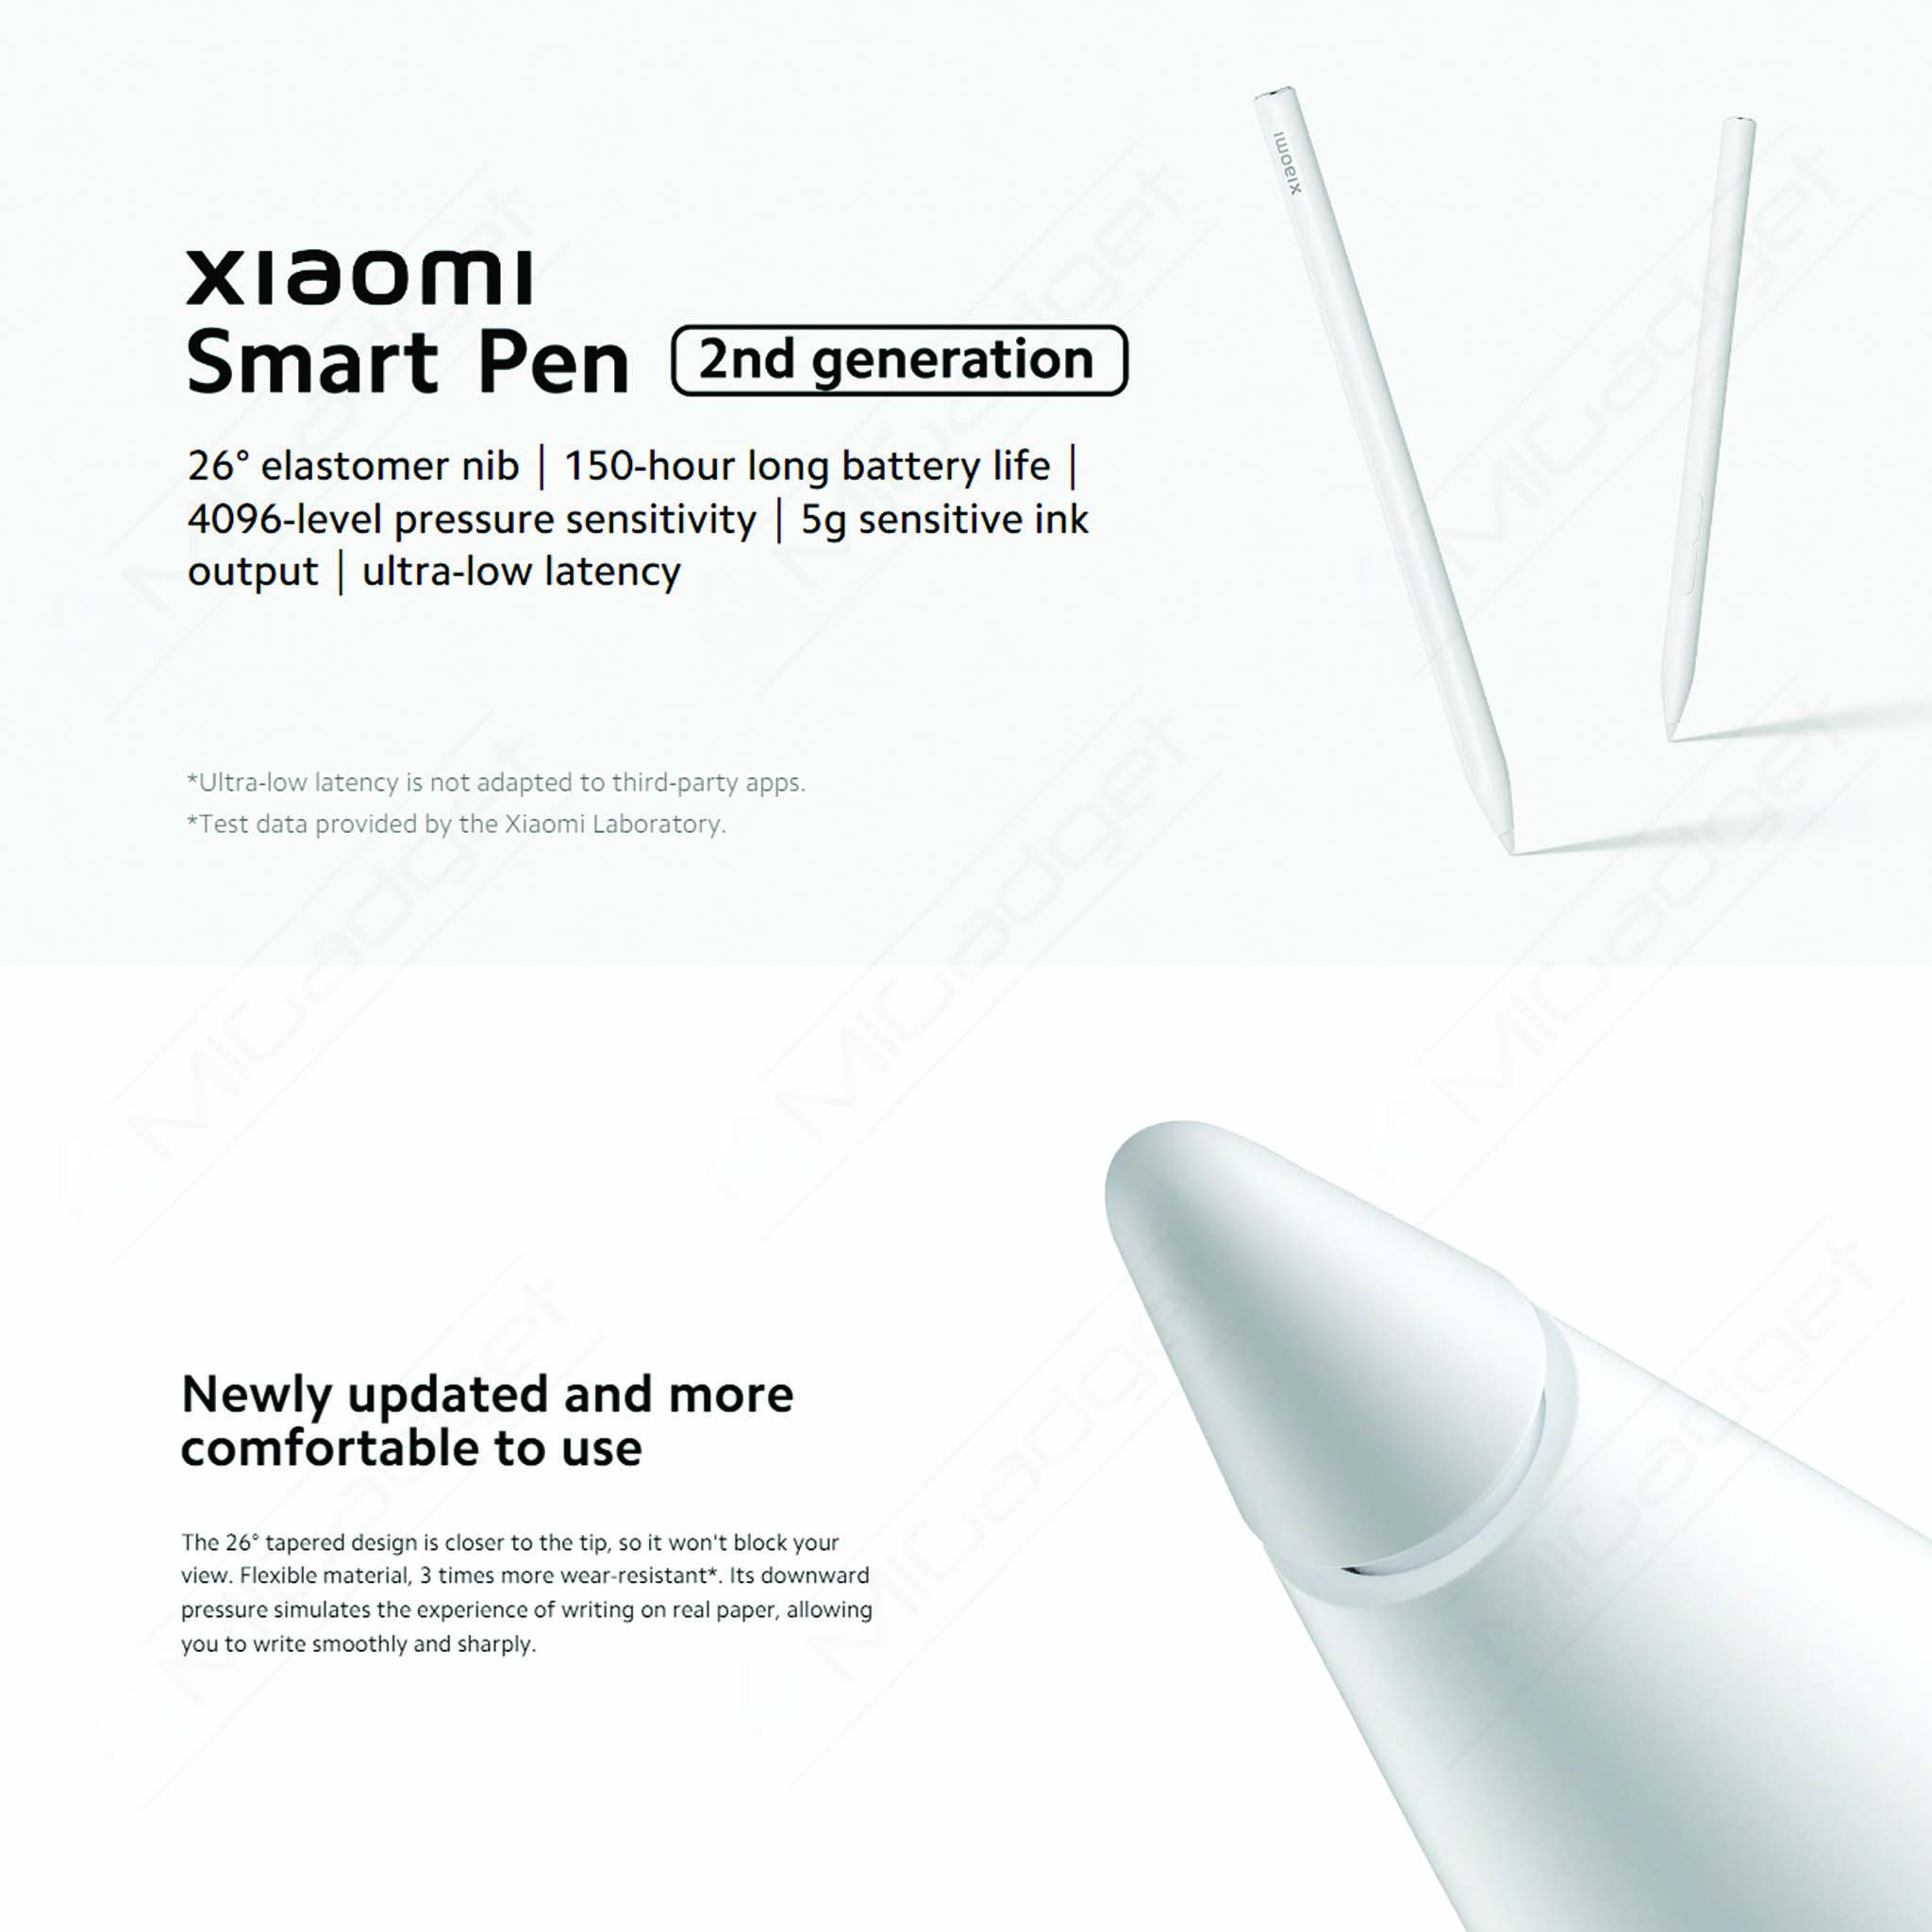 Xiaomi Smart Pen Gen 2 Stylus Xiaomi Mi Pad 5 6 - Mi Gadget Malang